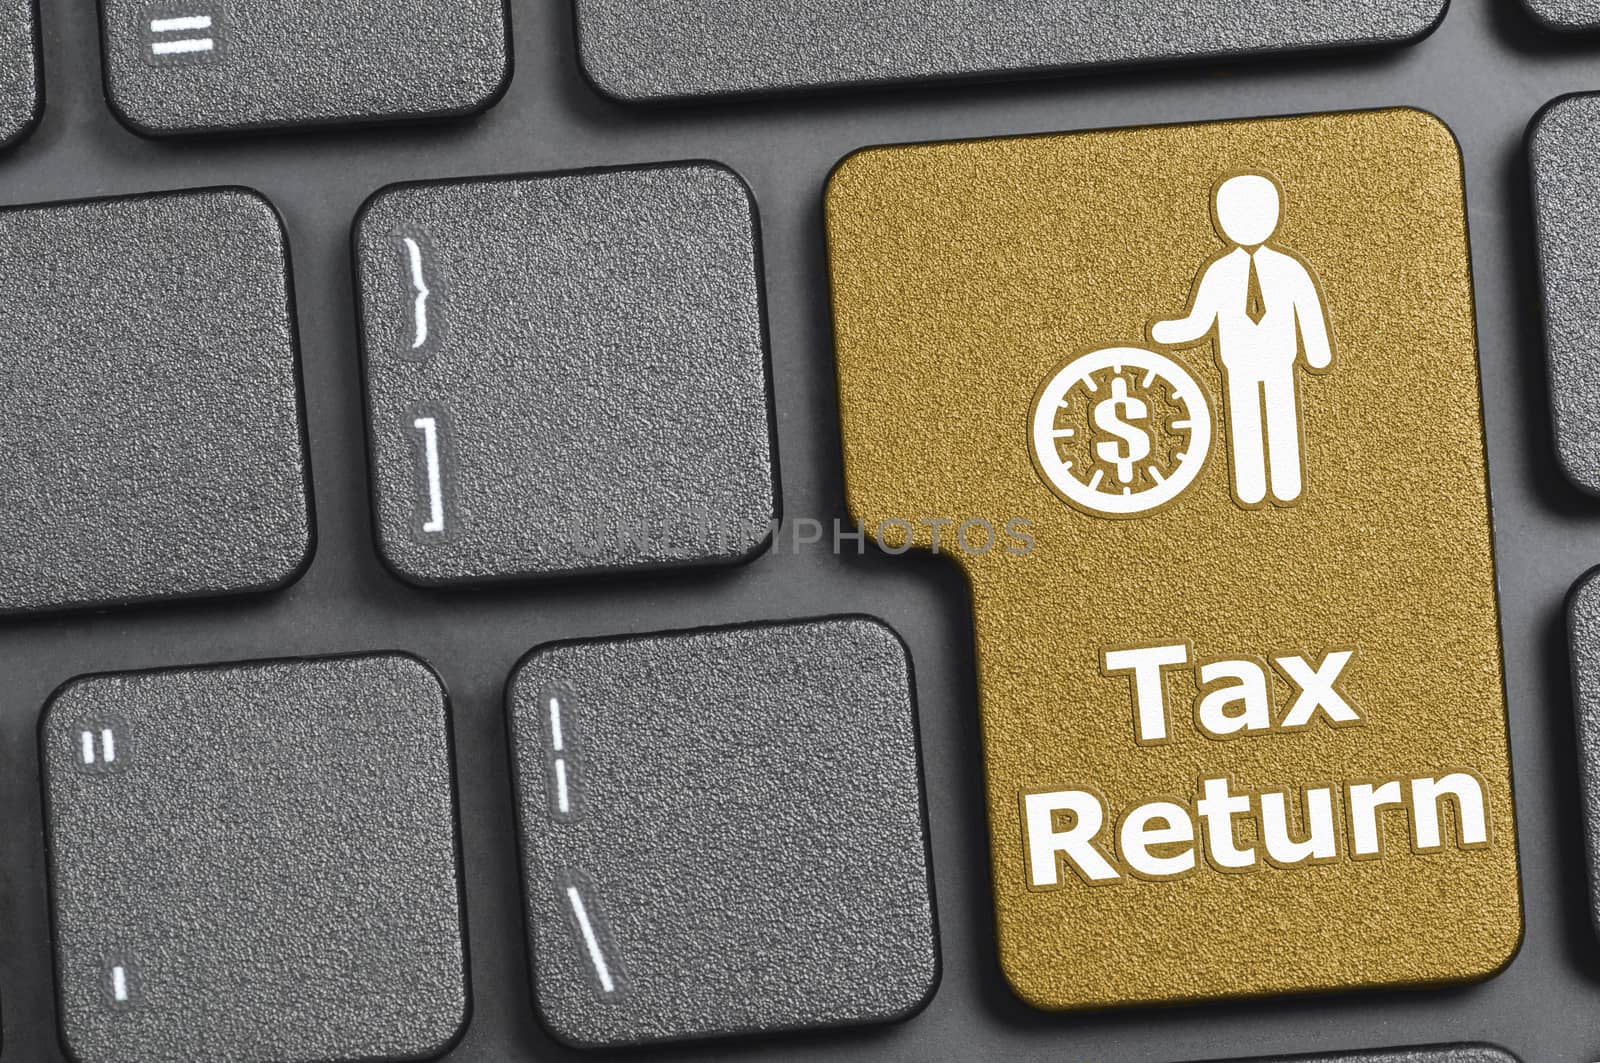 Tax return key on keyboard by payphoto